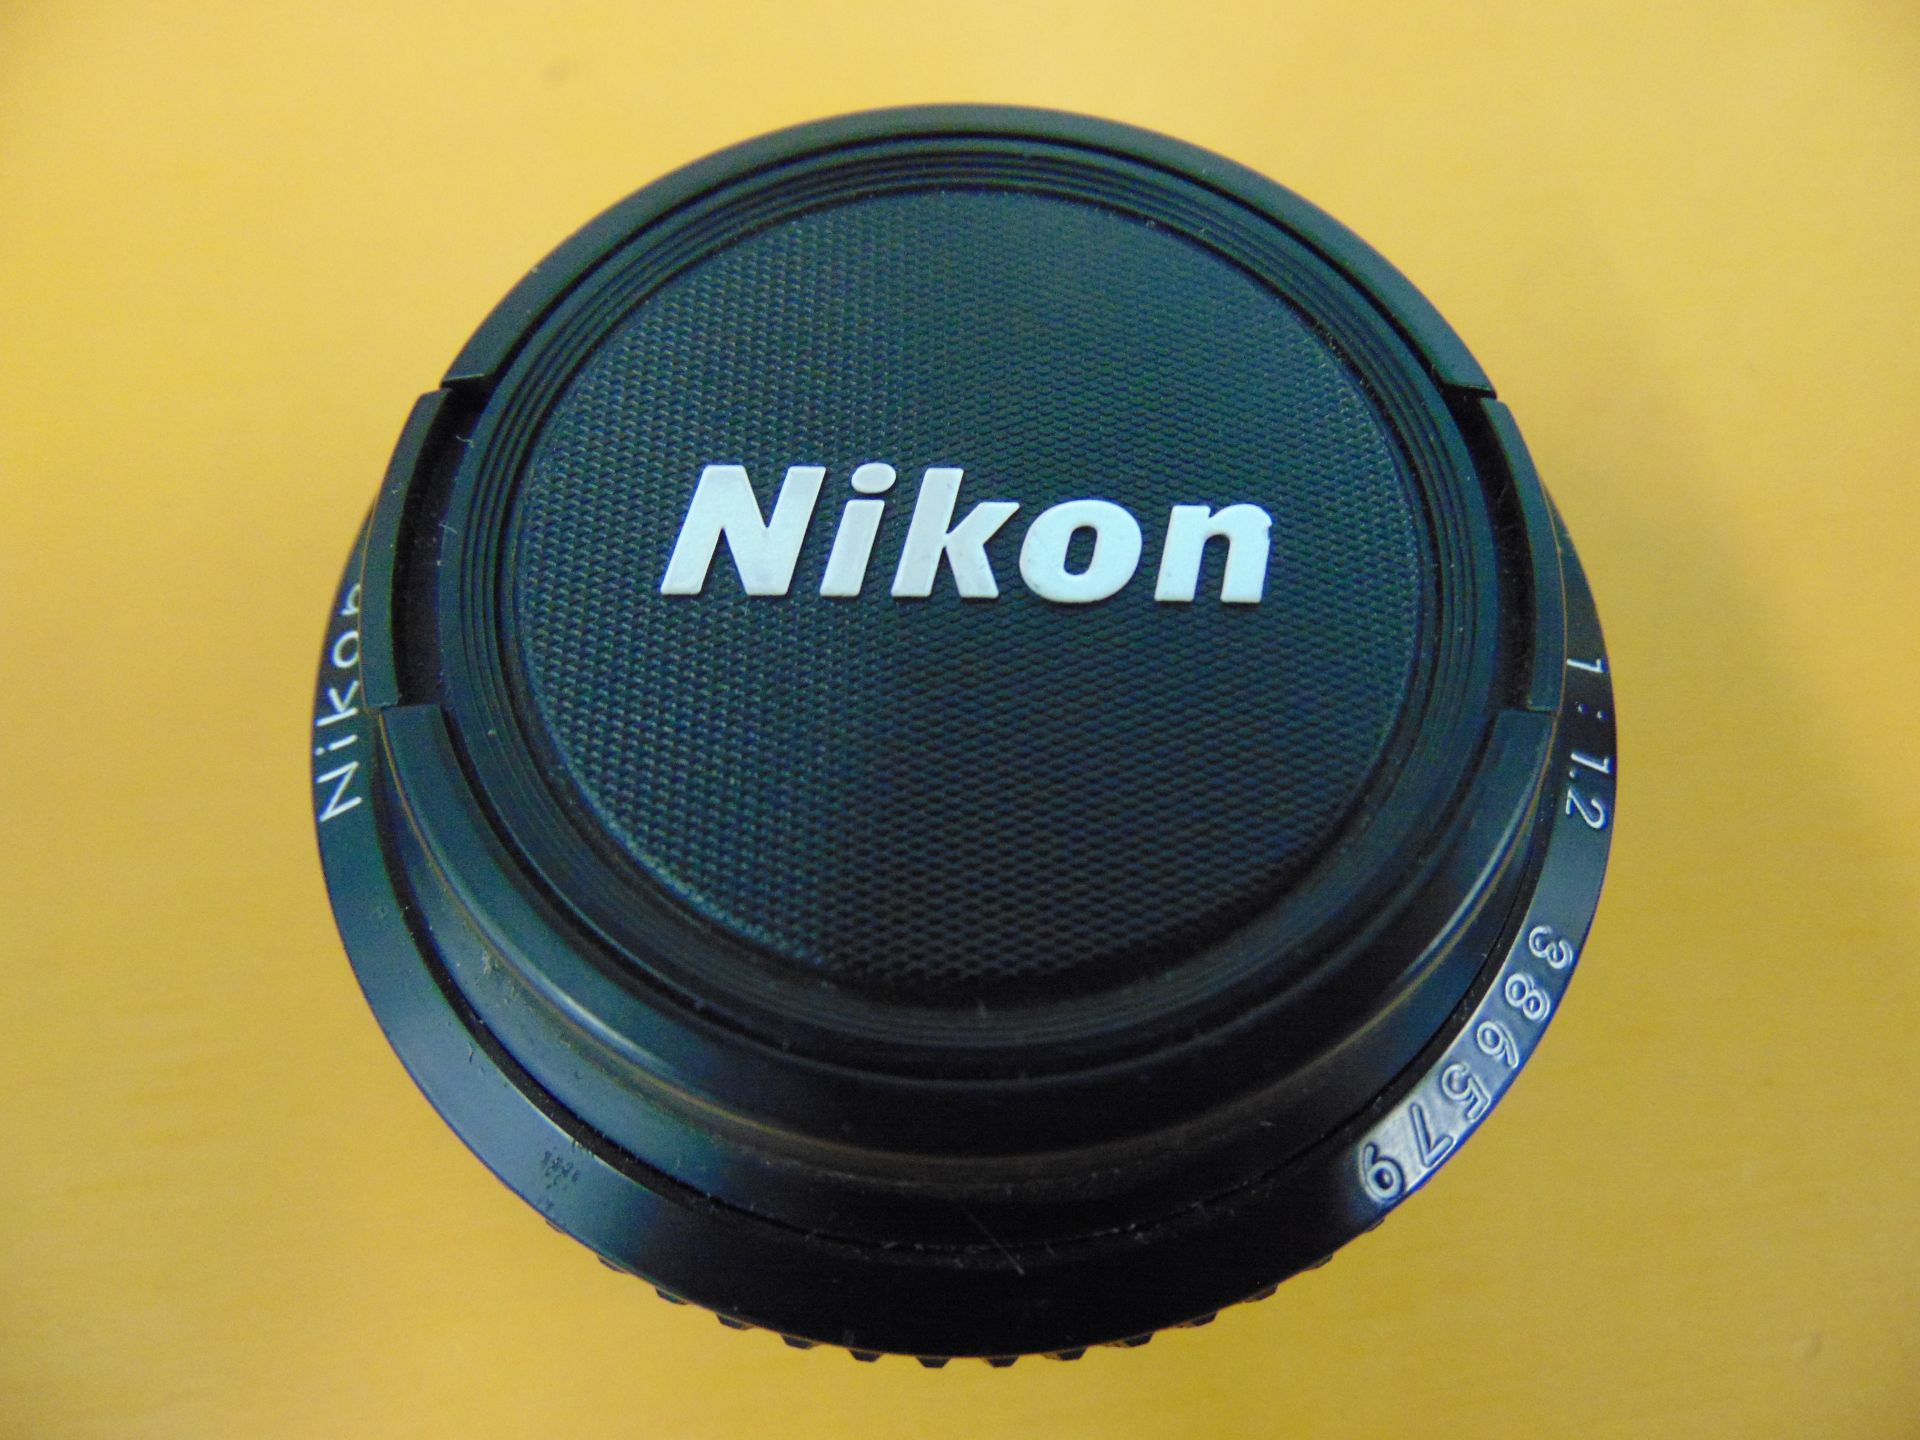 Nikon 50mm F1.2D AIS Nikkor Lense - Image 2 of 4